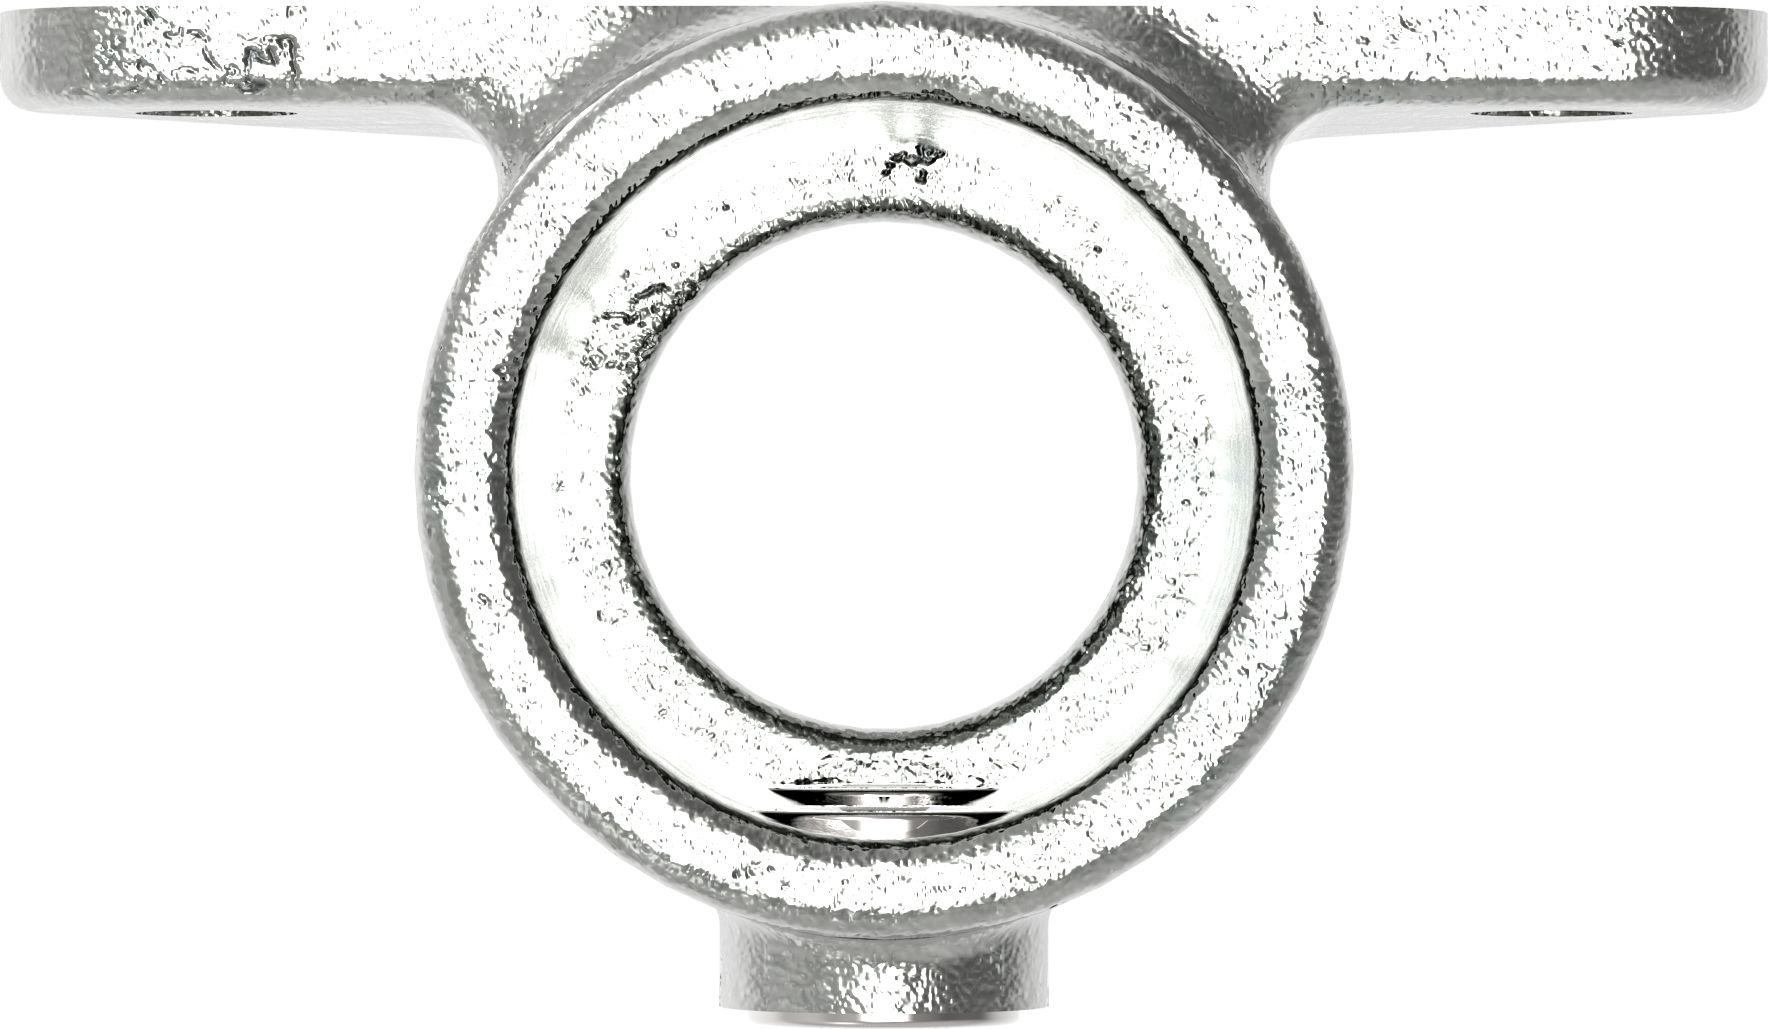 Rohrverbinder | Wandhalter Dreieckflansch | 146B34 | 33,7 mm | 1" | Feuerverzinkt u. Elektrogalvanisiert